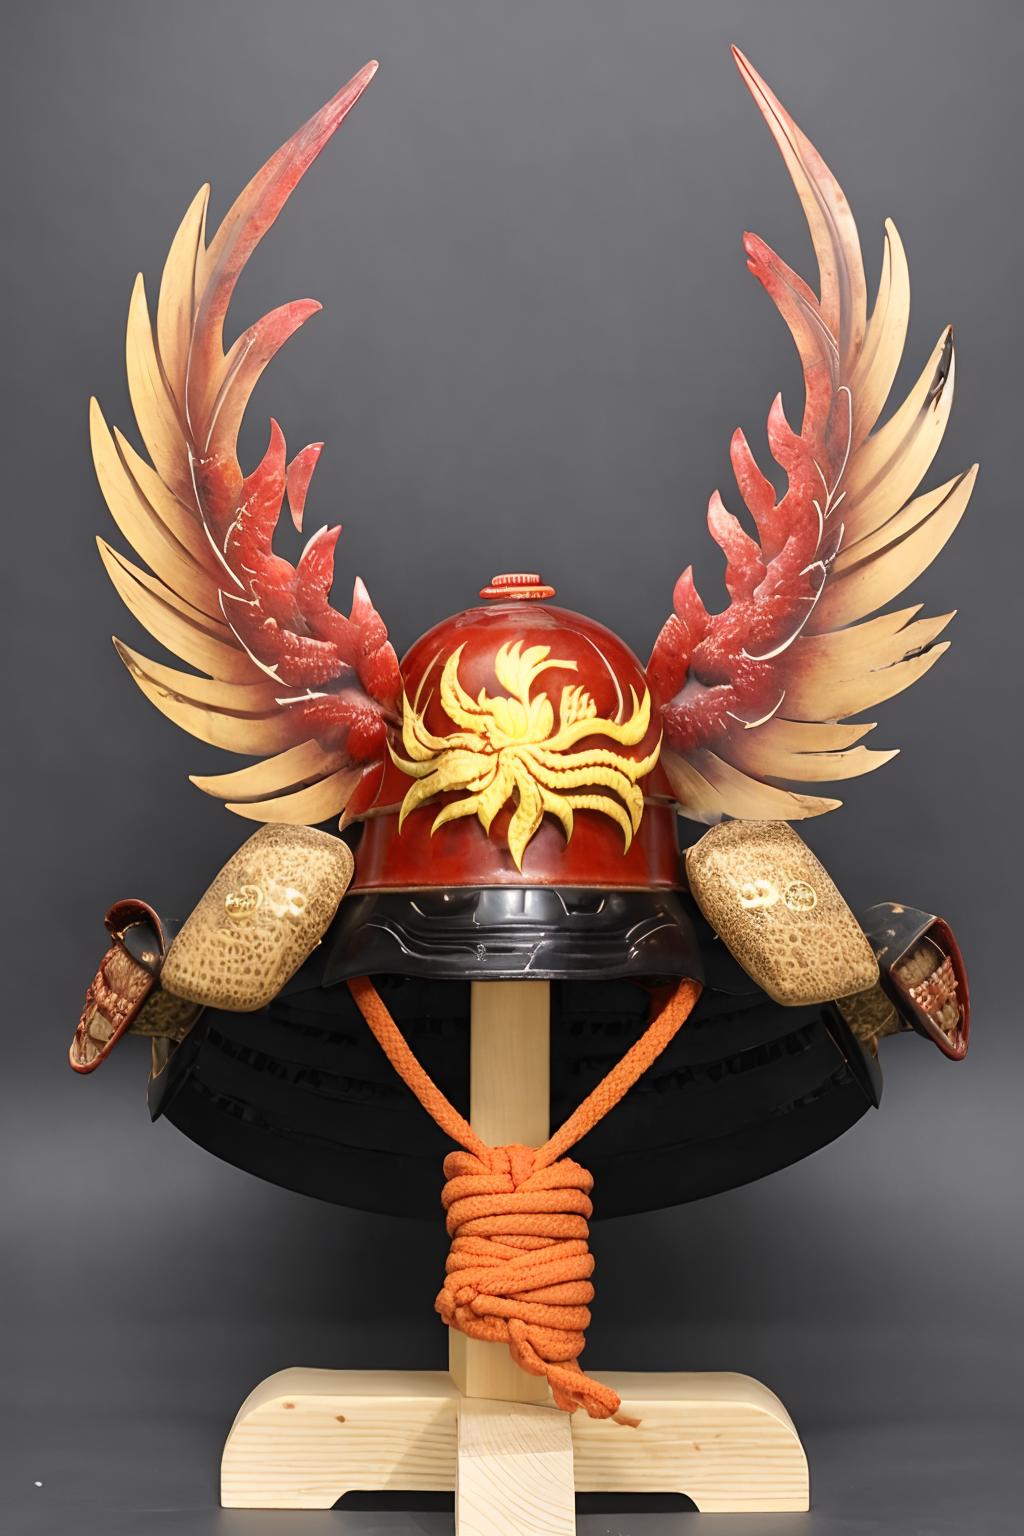 兜 kabuto 武士头盔 samurai helmet image by Kikkawa